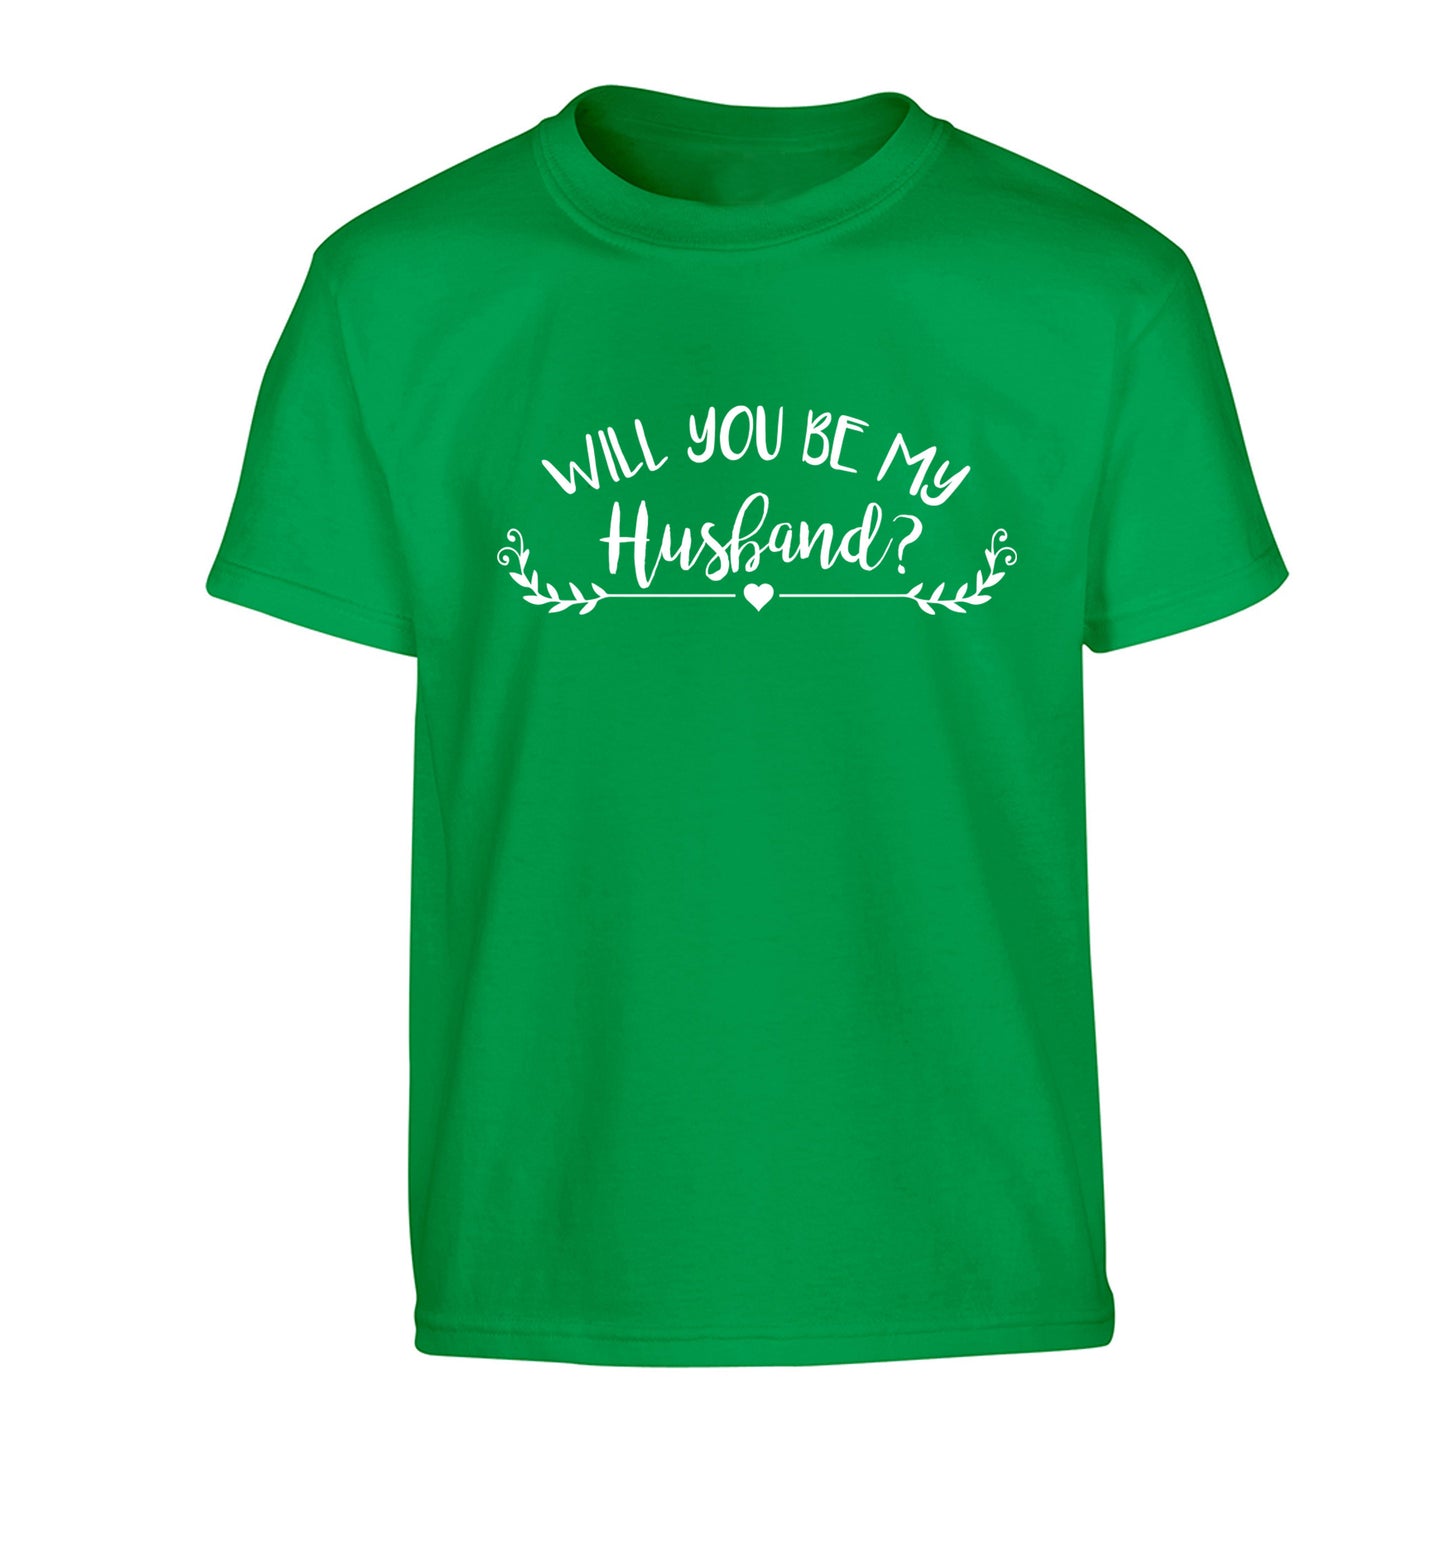 Will you be my husband? Children's green Tshirt 12-14 Years